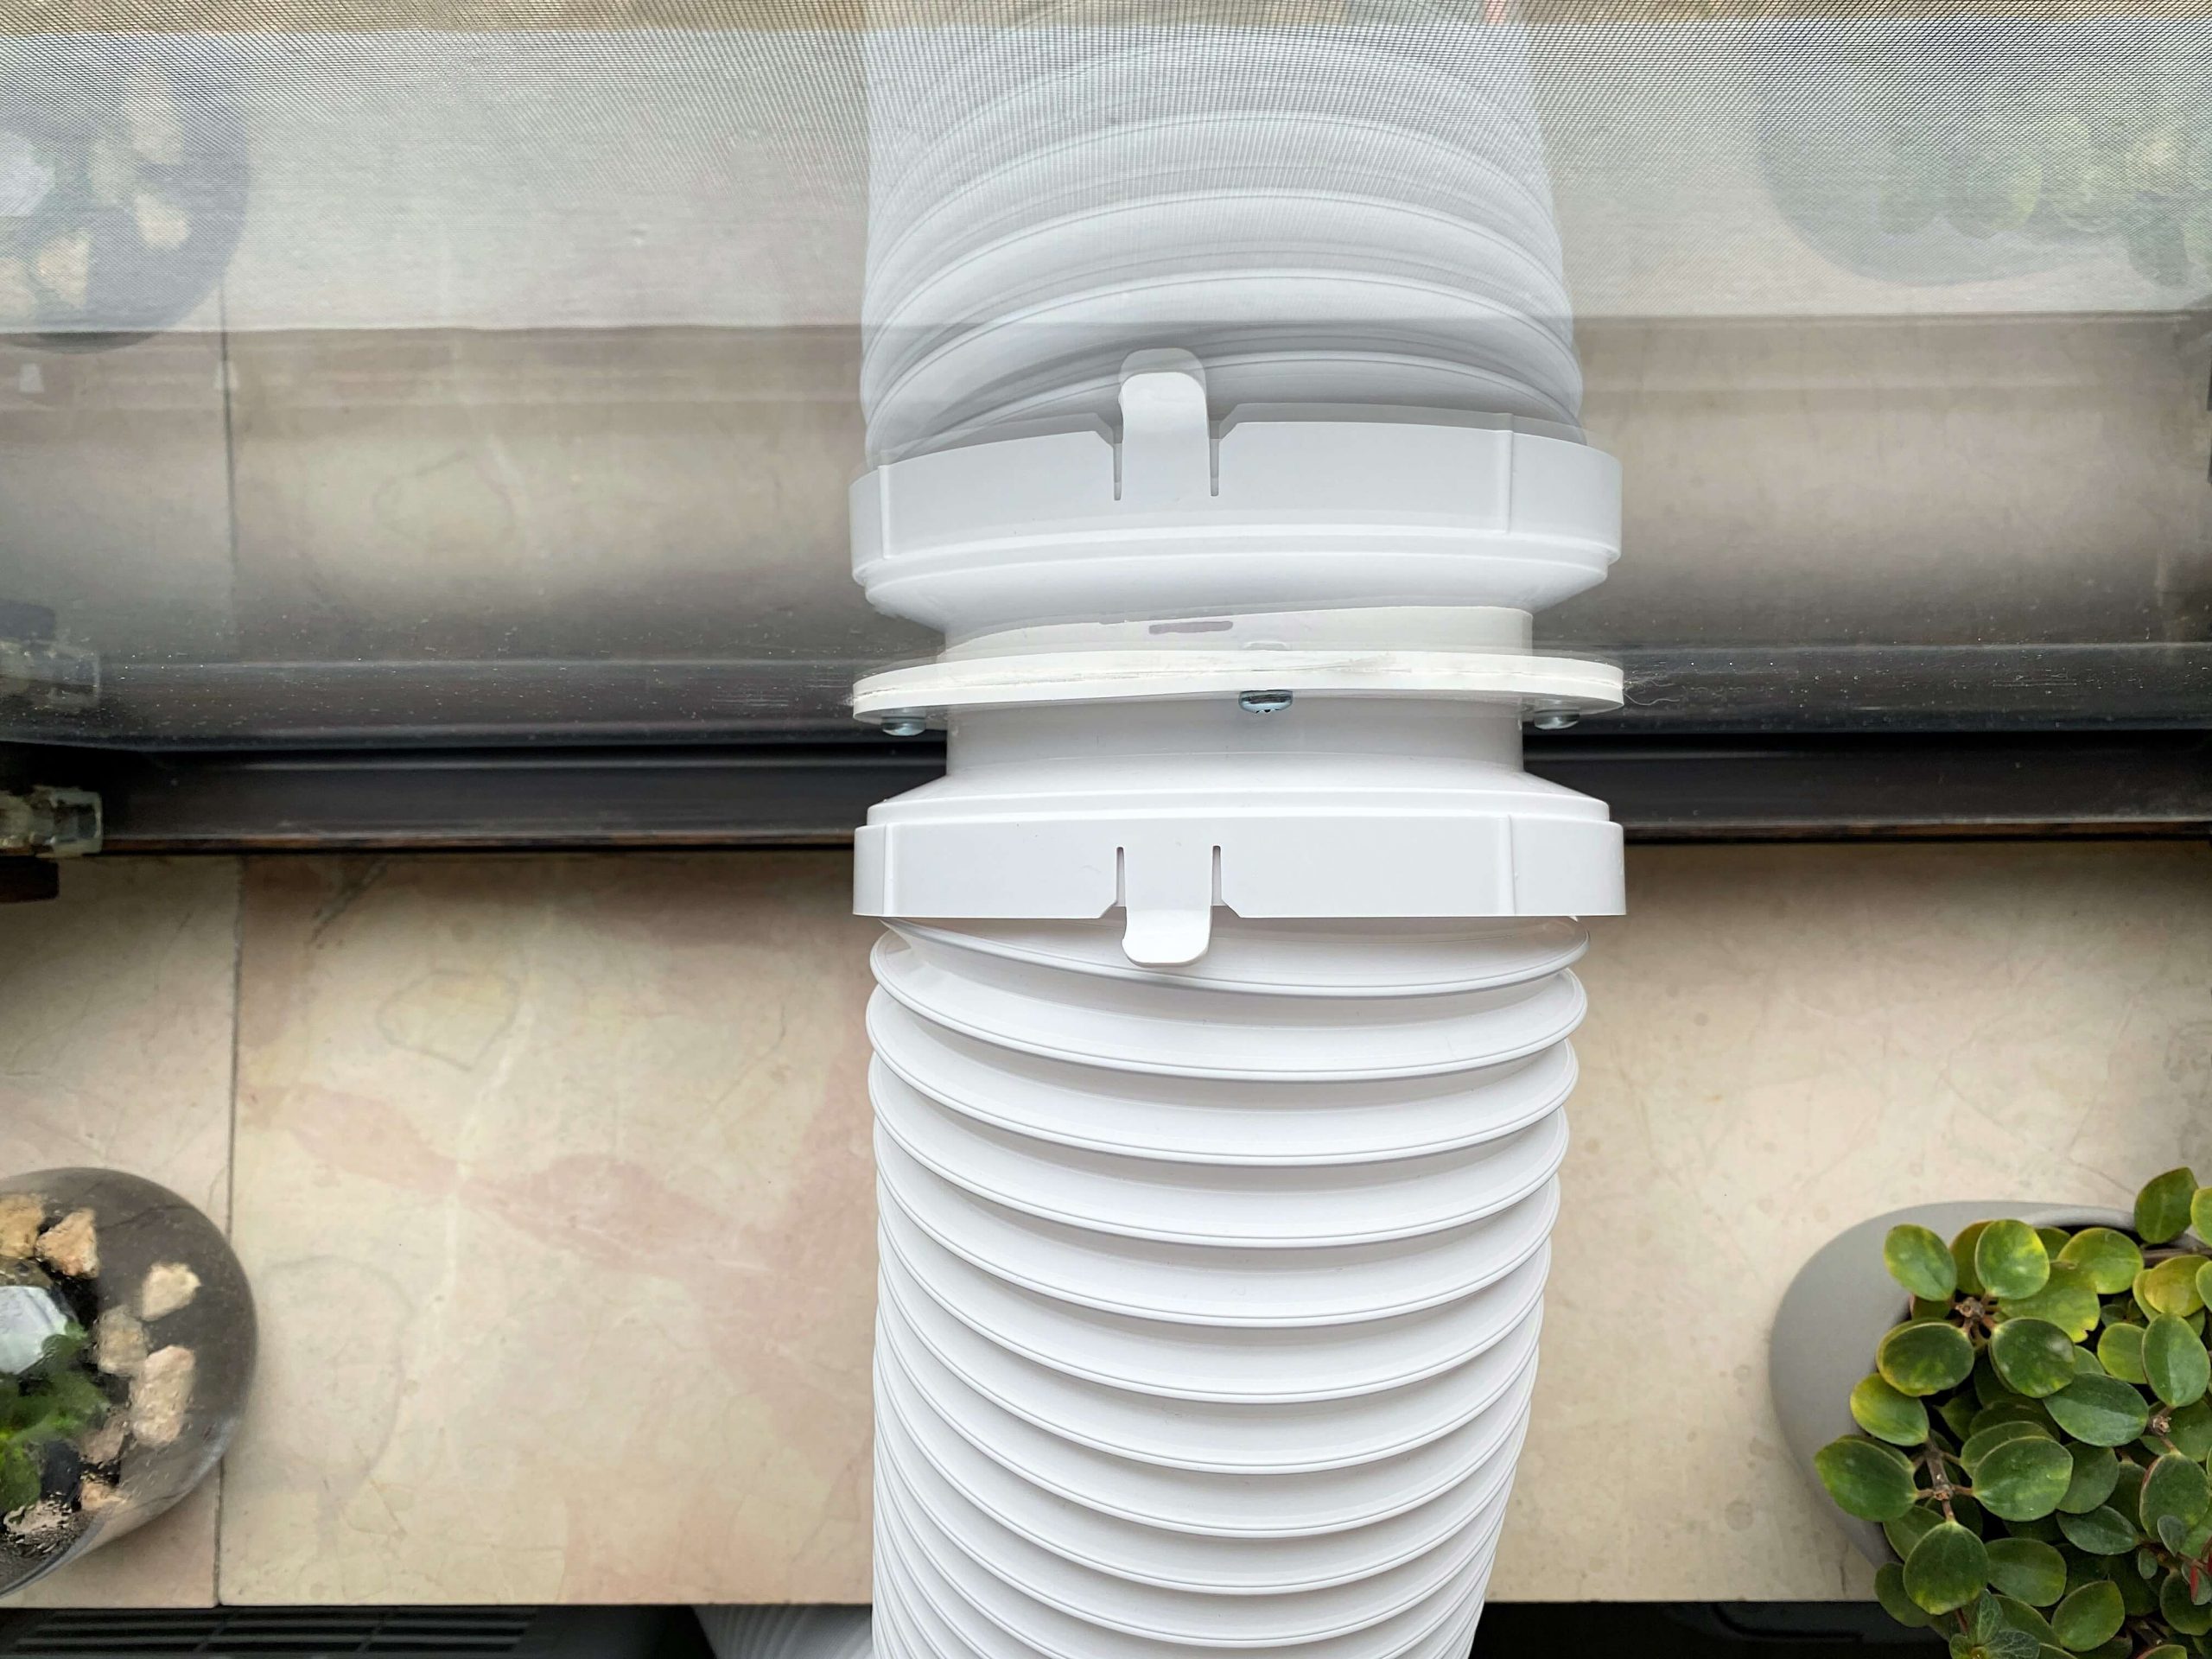 Projekt-22kühler-Sommer22-Klimaanlagensteuerung-via-Apple-HomeKit-von-tado10-scaled Projekt "kühler Sommer" - Apple HomeKit Klimaanlagensteuerung von tado